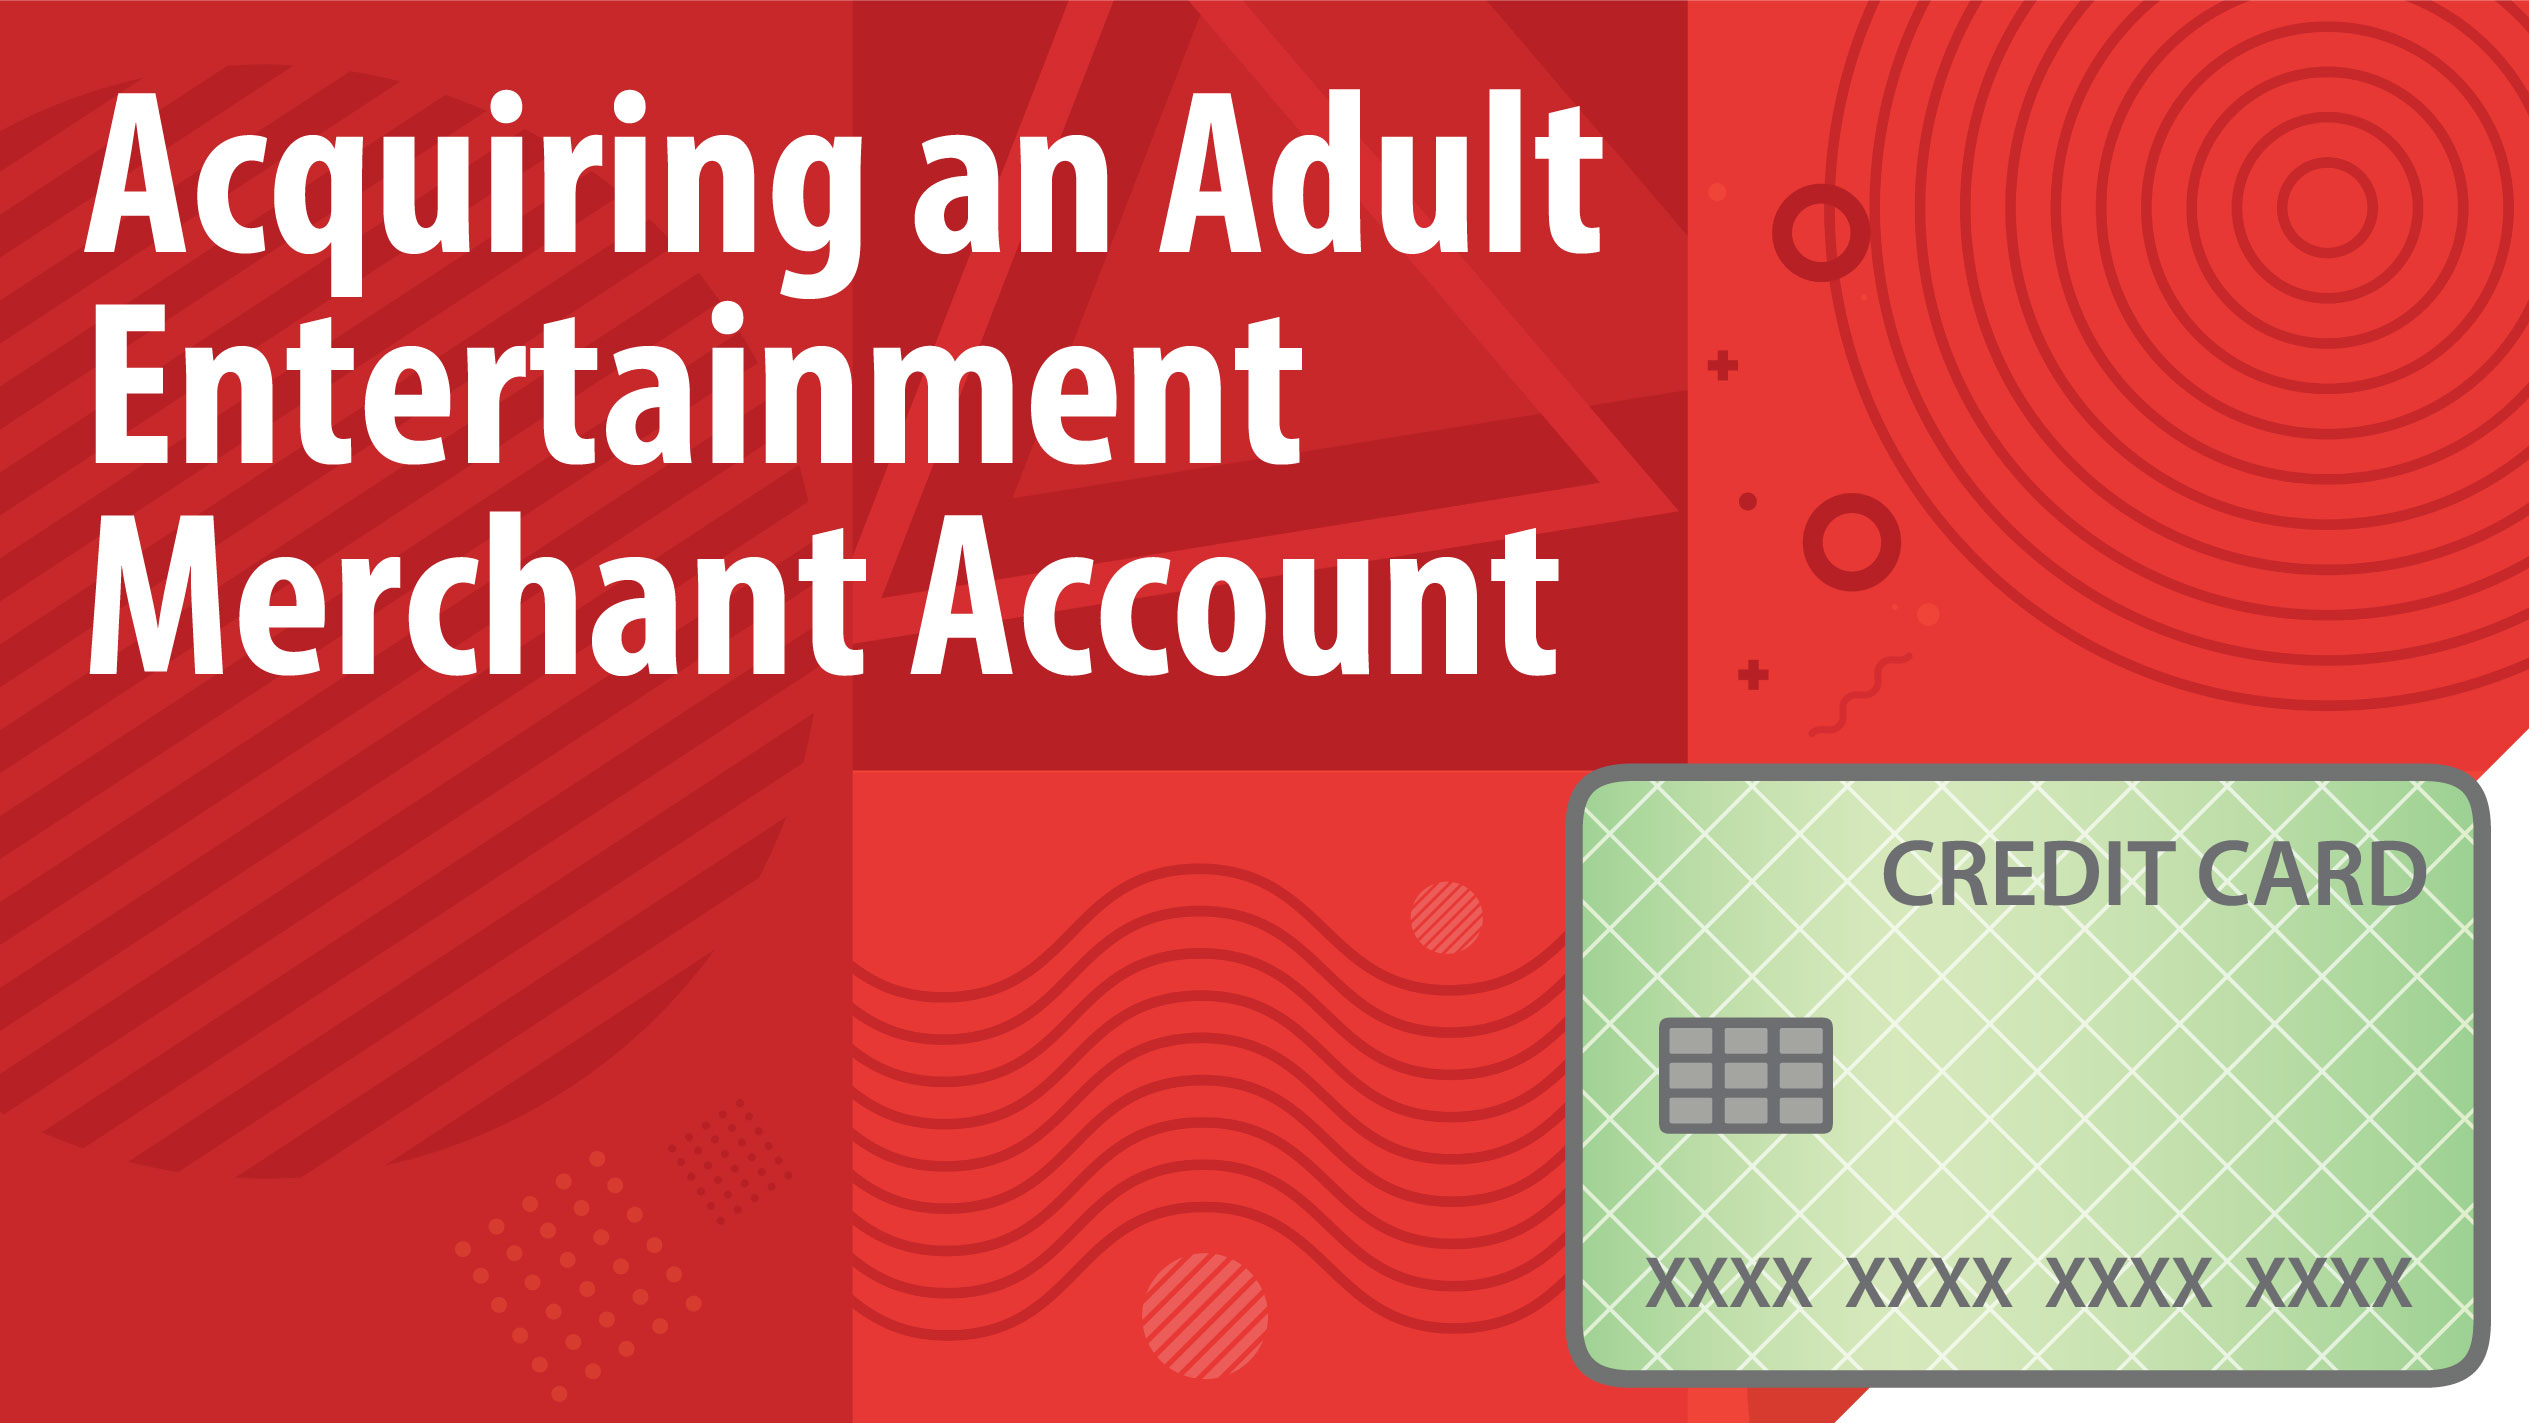 Account adult card credit fraud merchant processing